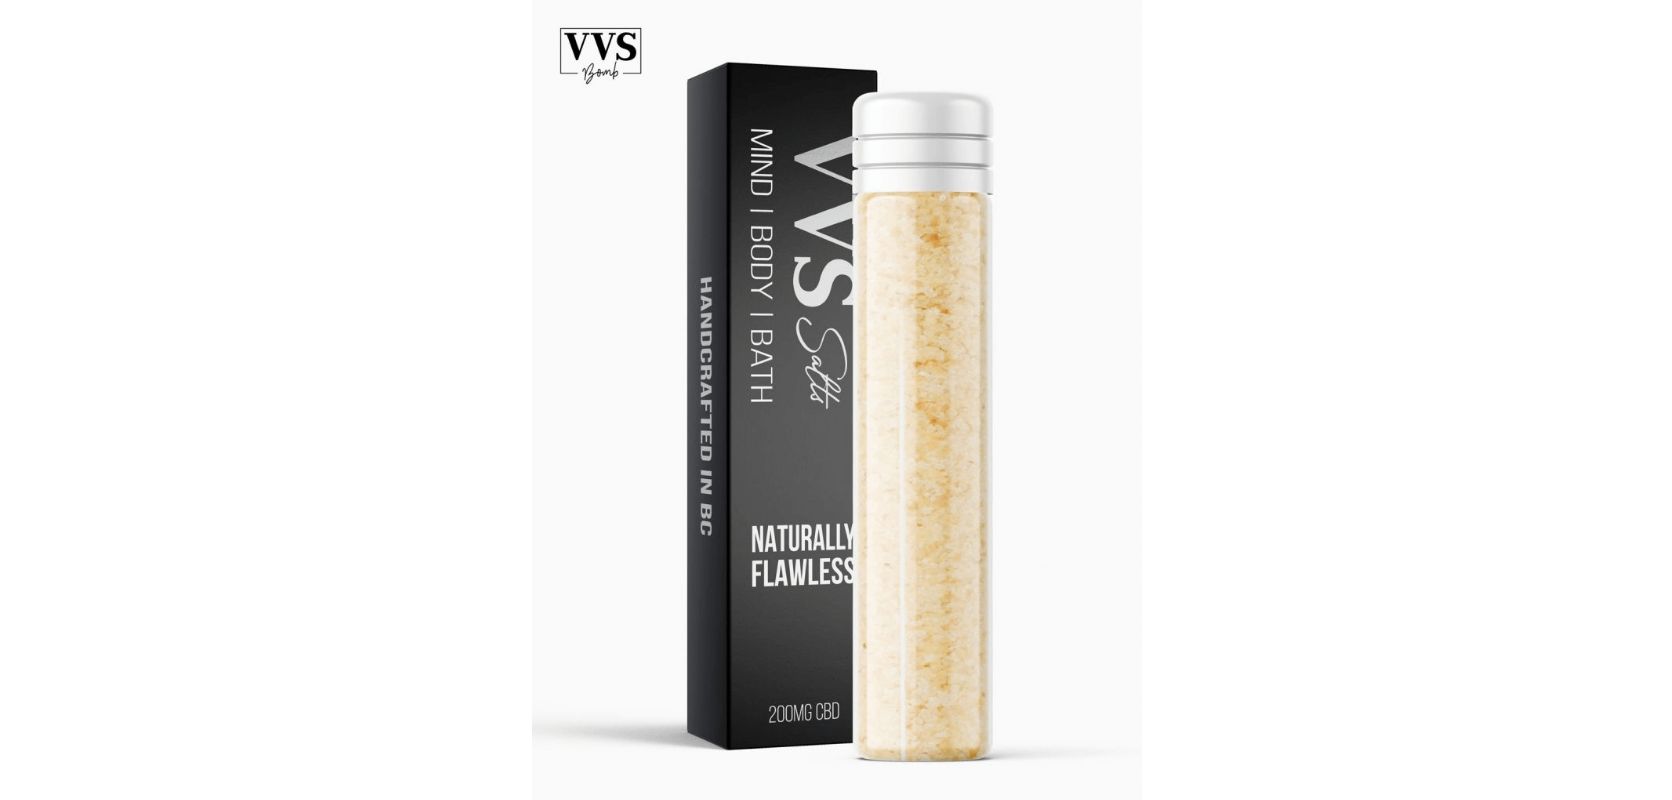 The VVS Bath Salts - Naturally Flawless 200mg CBD is an amazing alternative to THC bath bombs. 